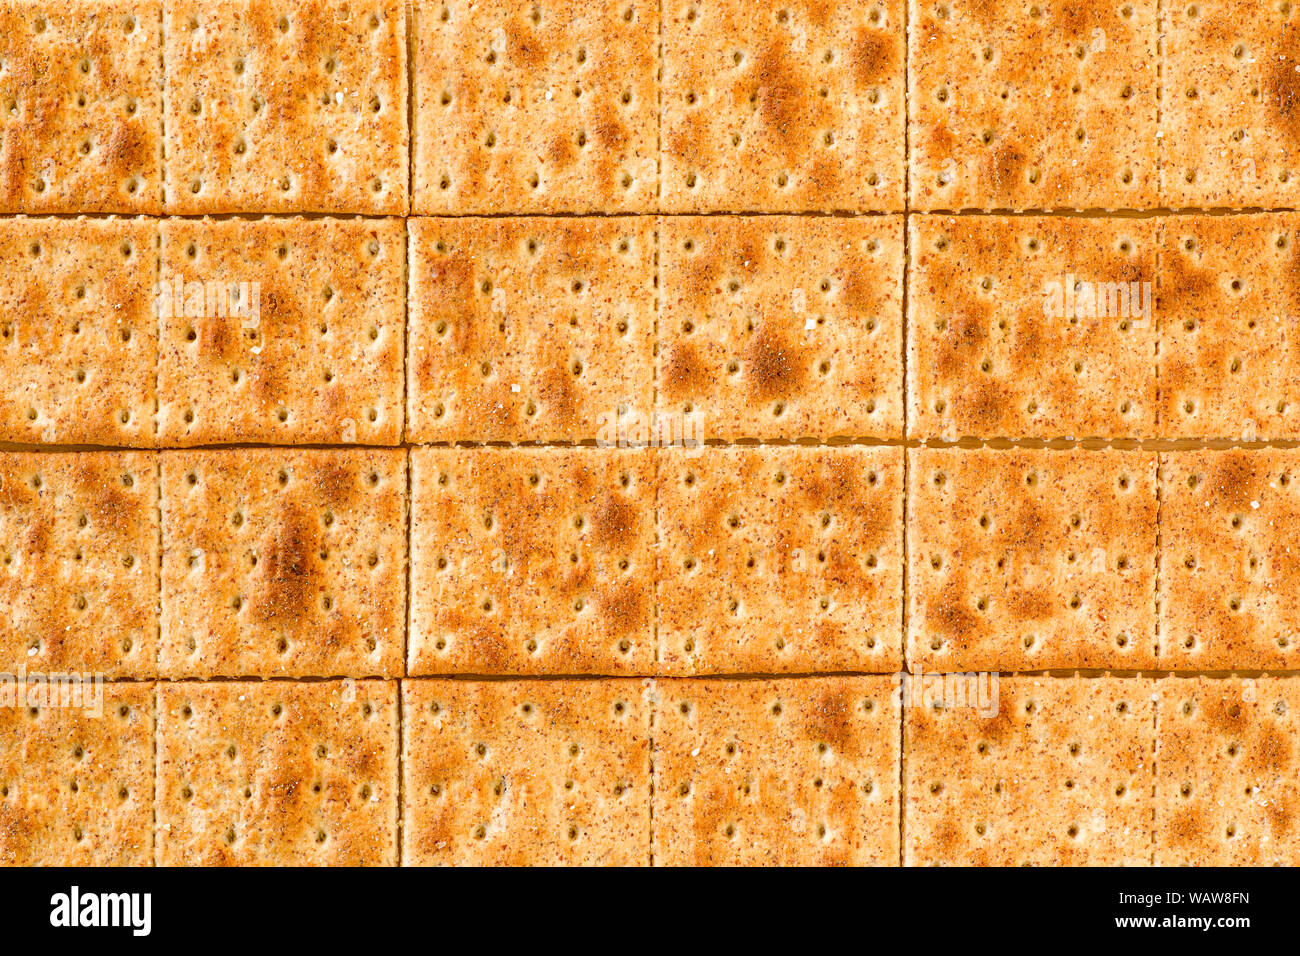 Full Frame Shot with Many Whole Wheat Crackers Stock Photo